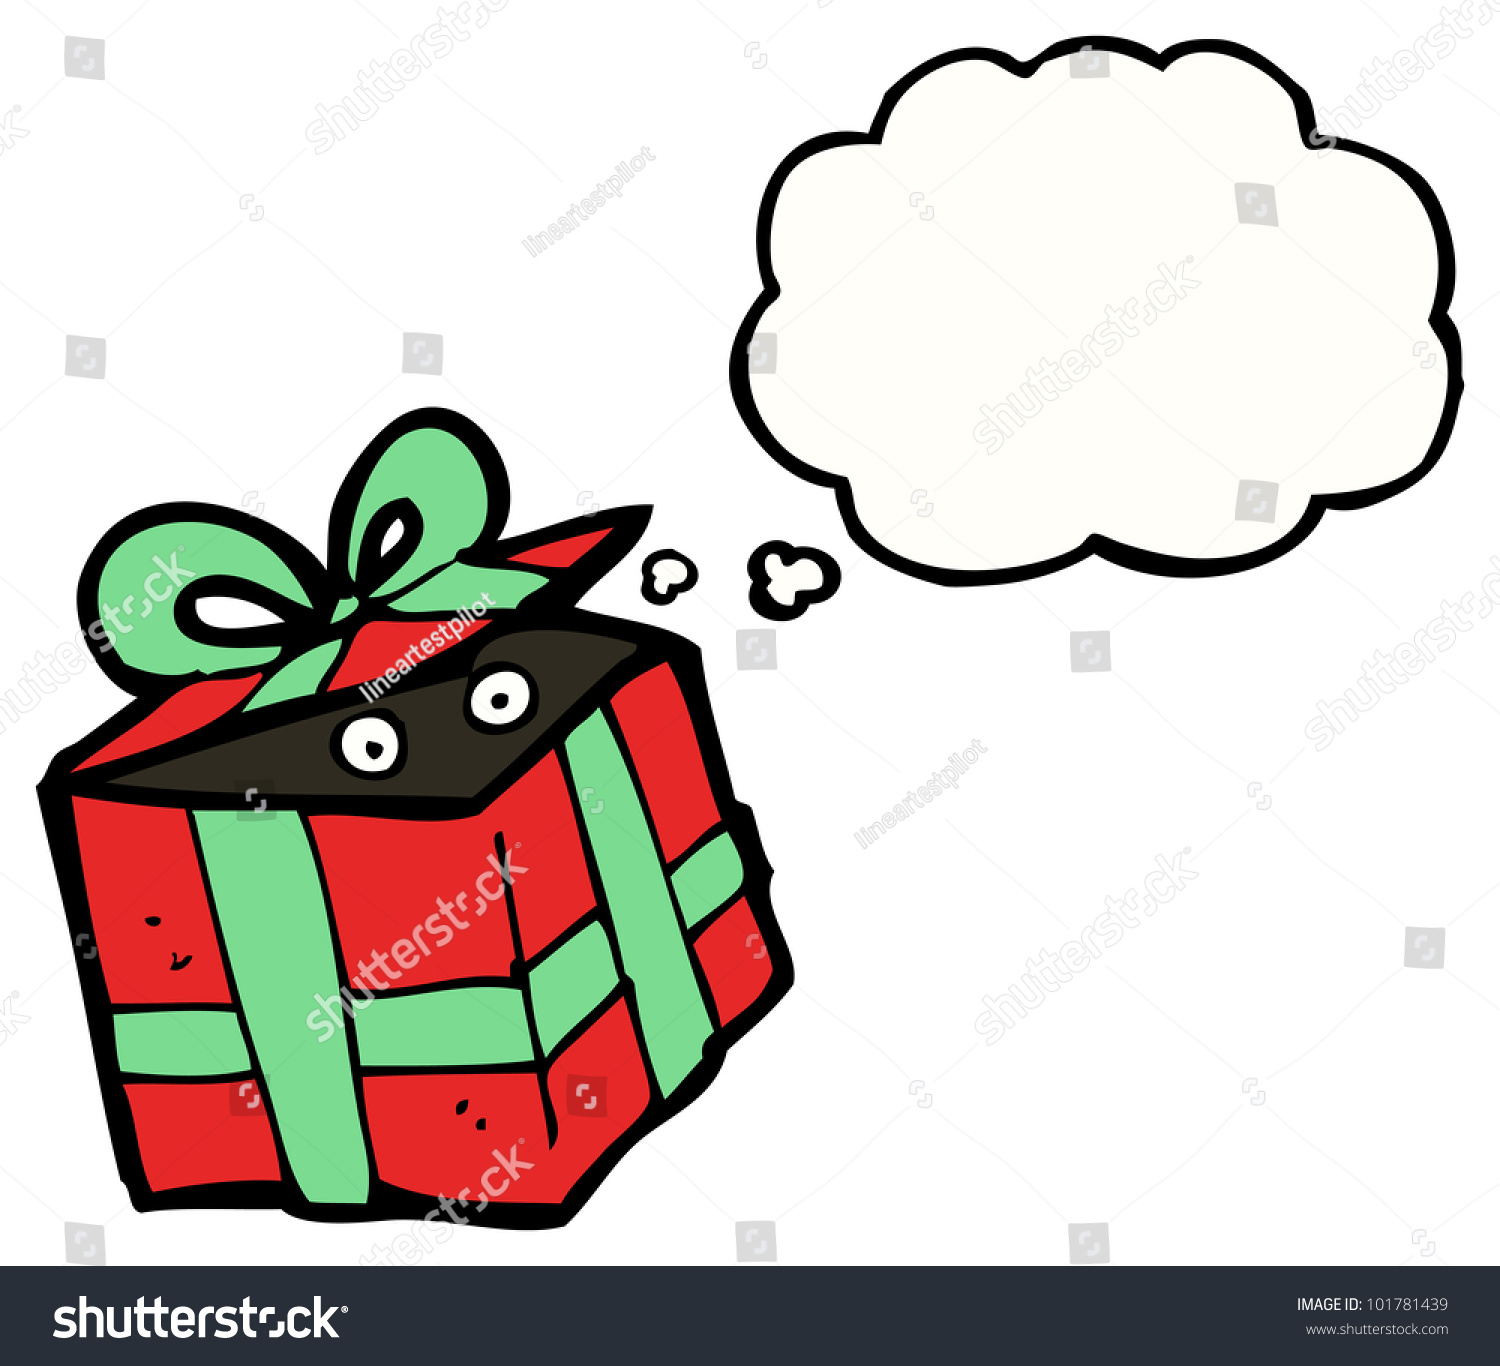 Cartoon Christmas Present Stock Photo 101781439 : Shutterstock